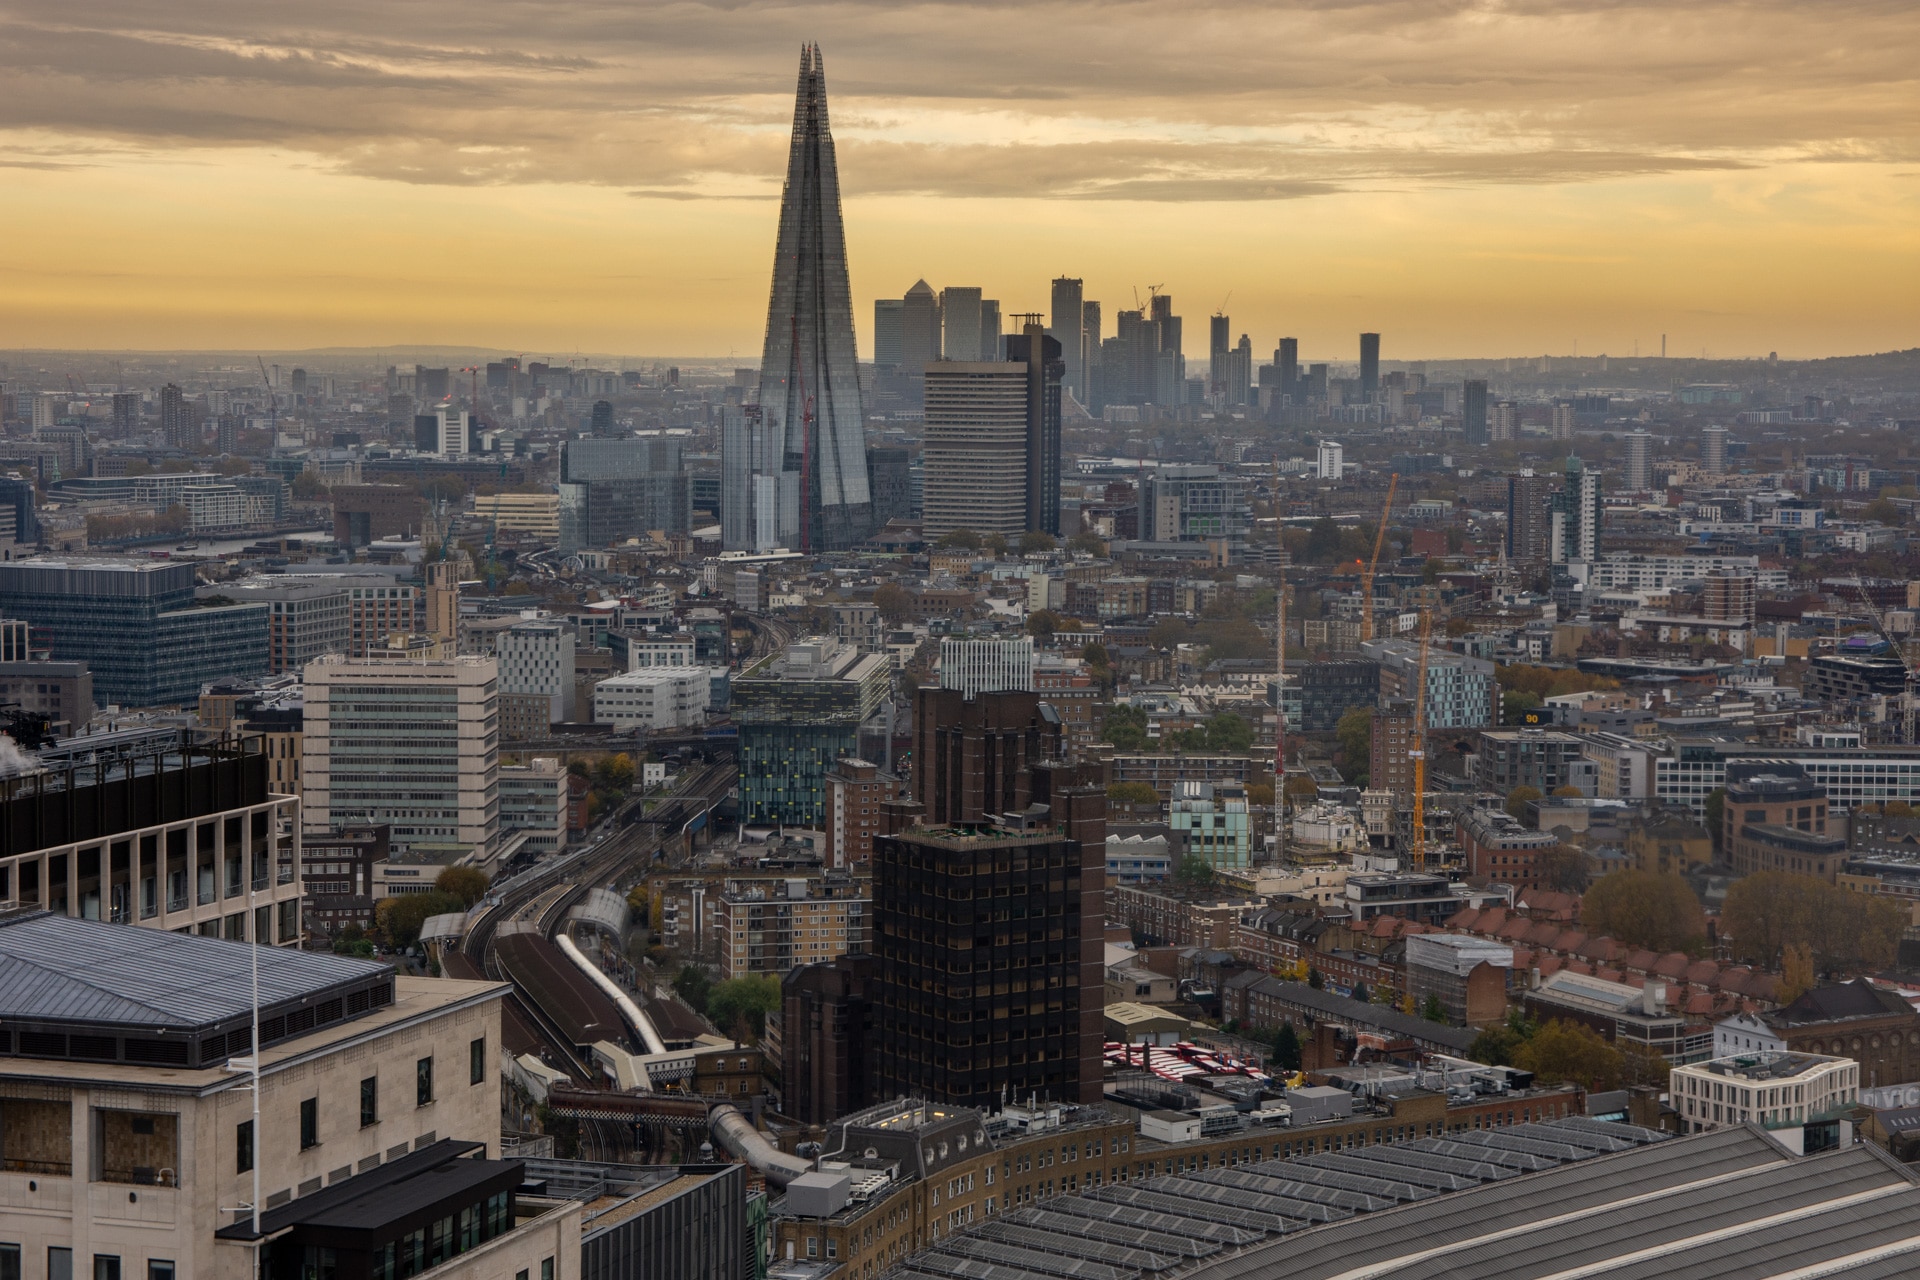 Shard - widok z London Eye